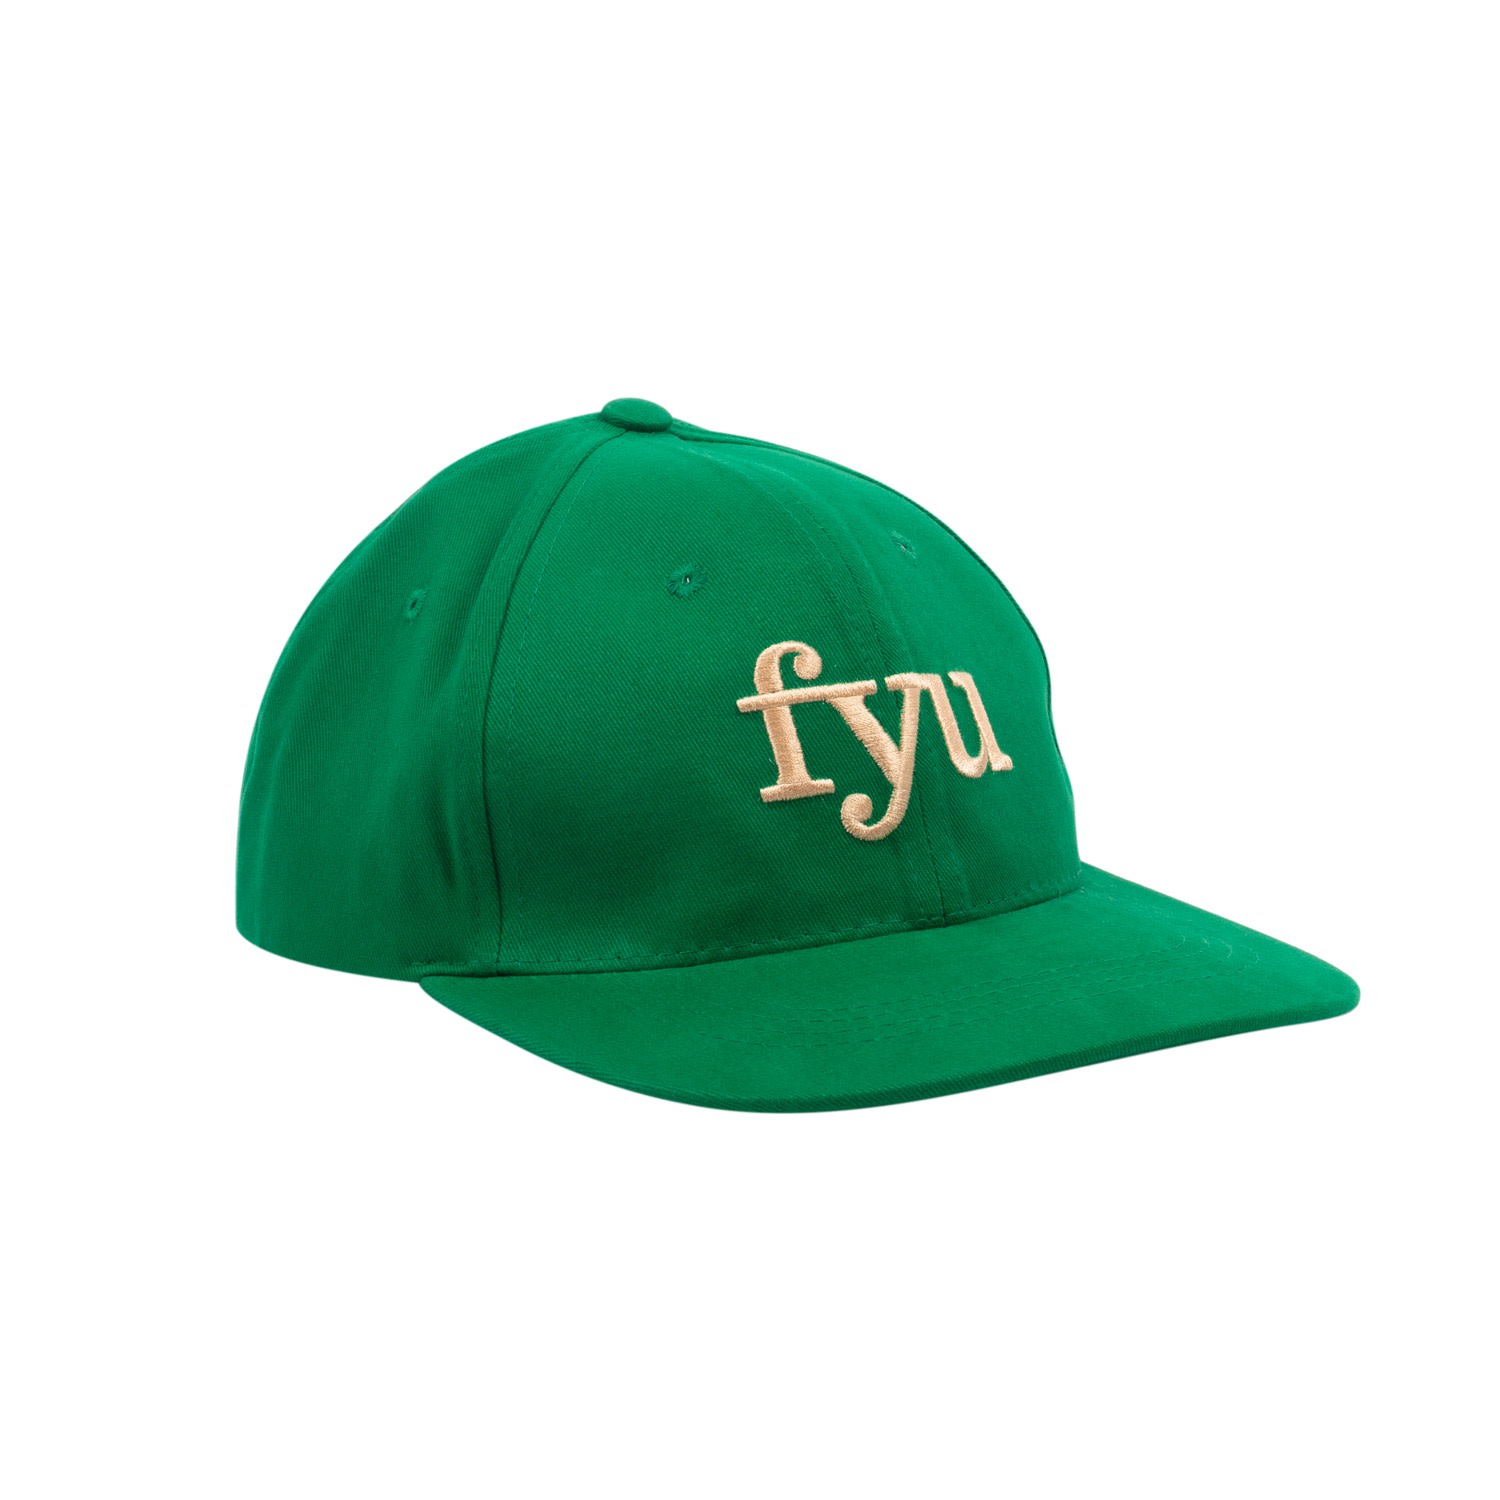 Men’s Embroidered Logo Baseball Cap Green One Size Fyu Paris